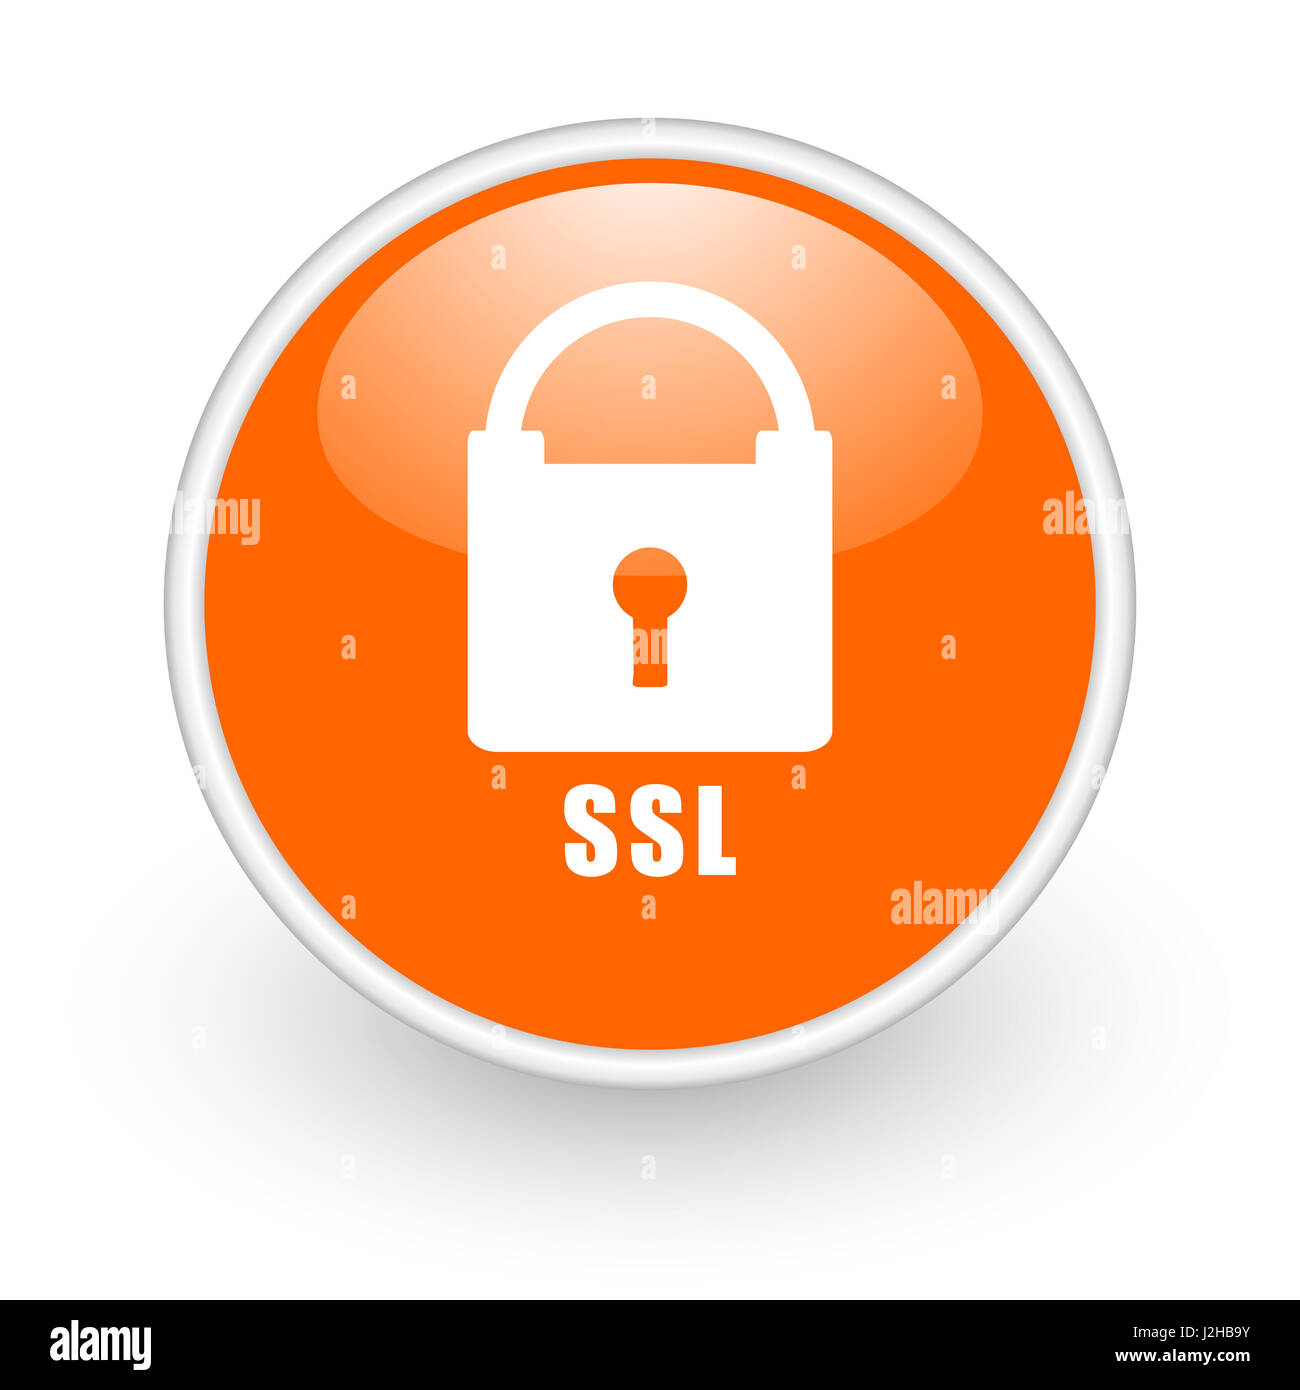 Csl modern design glossy orange web icon on white background. Stock Photo